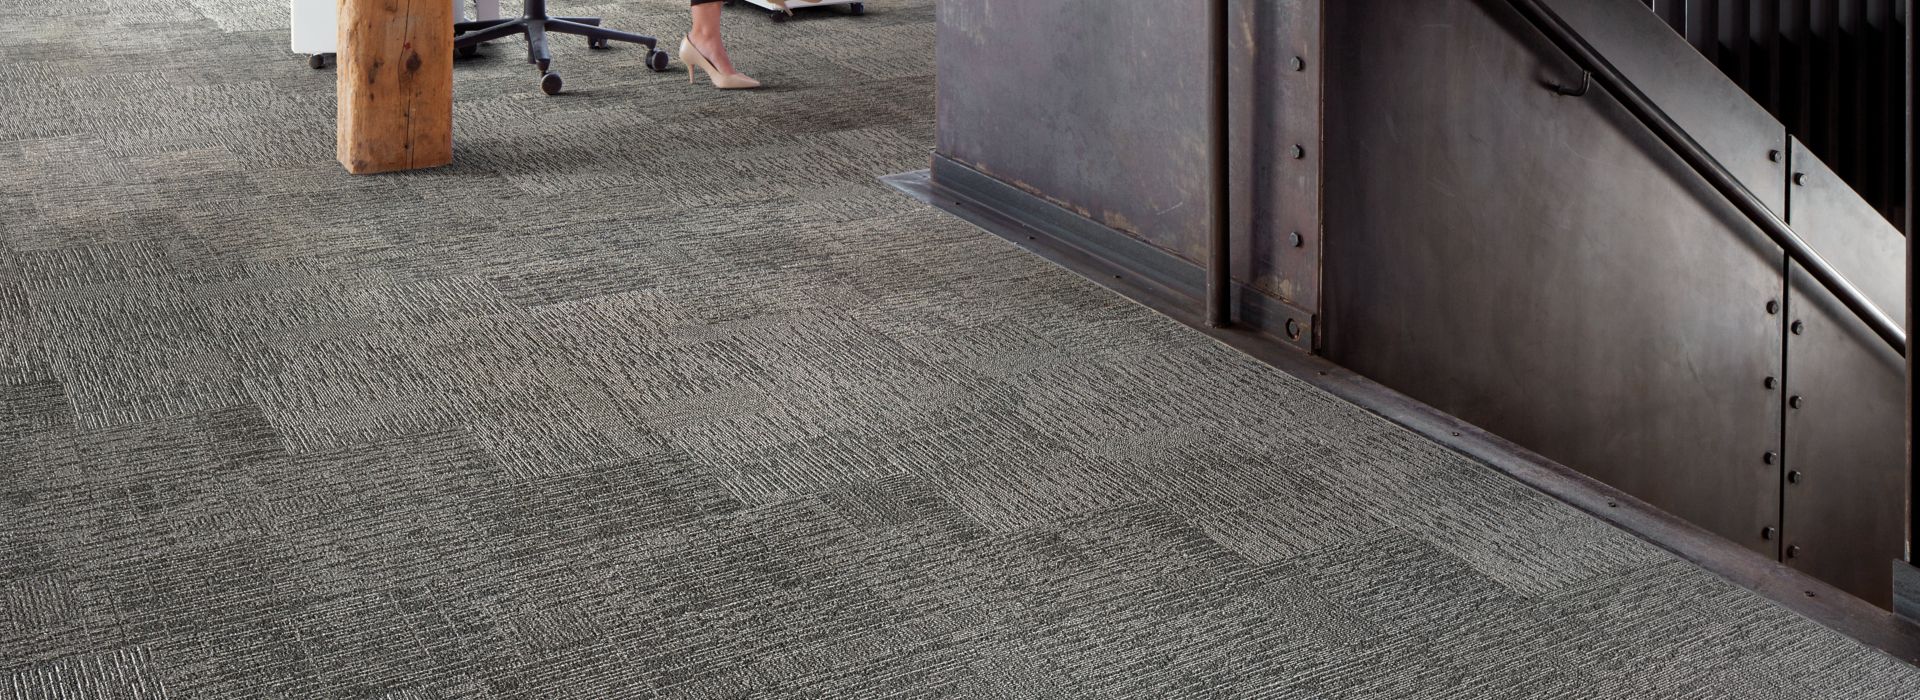 Interface Zen Stitch plank carpet tile in open office setting número de imagen 1